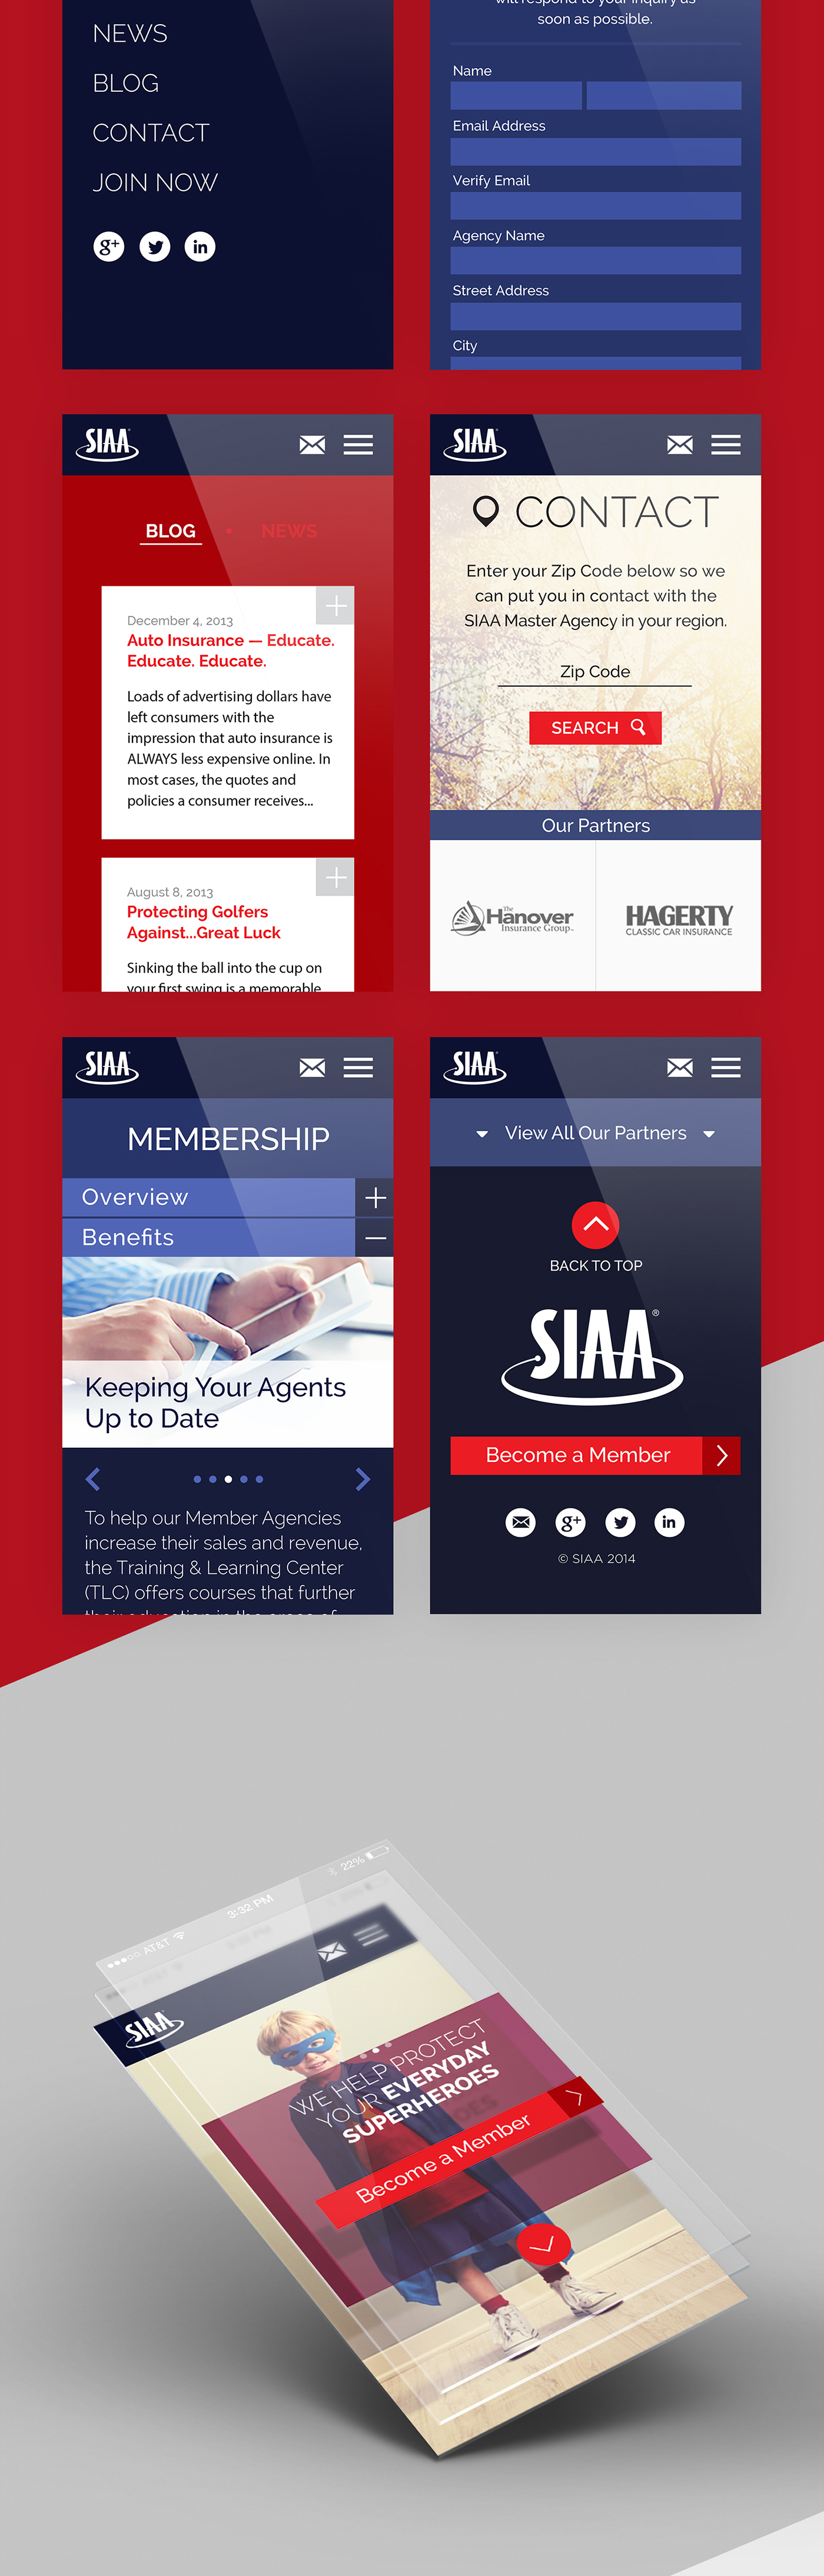 UI desktop mobile Website siaa insurance corporate brand business alliance modular Responsive comite